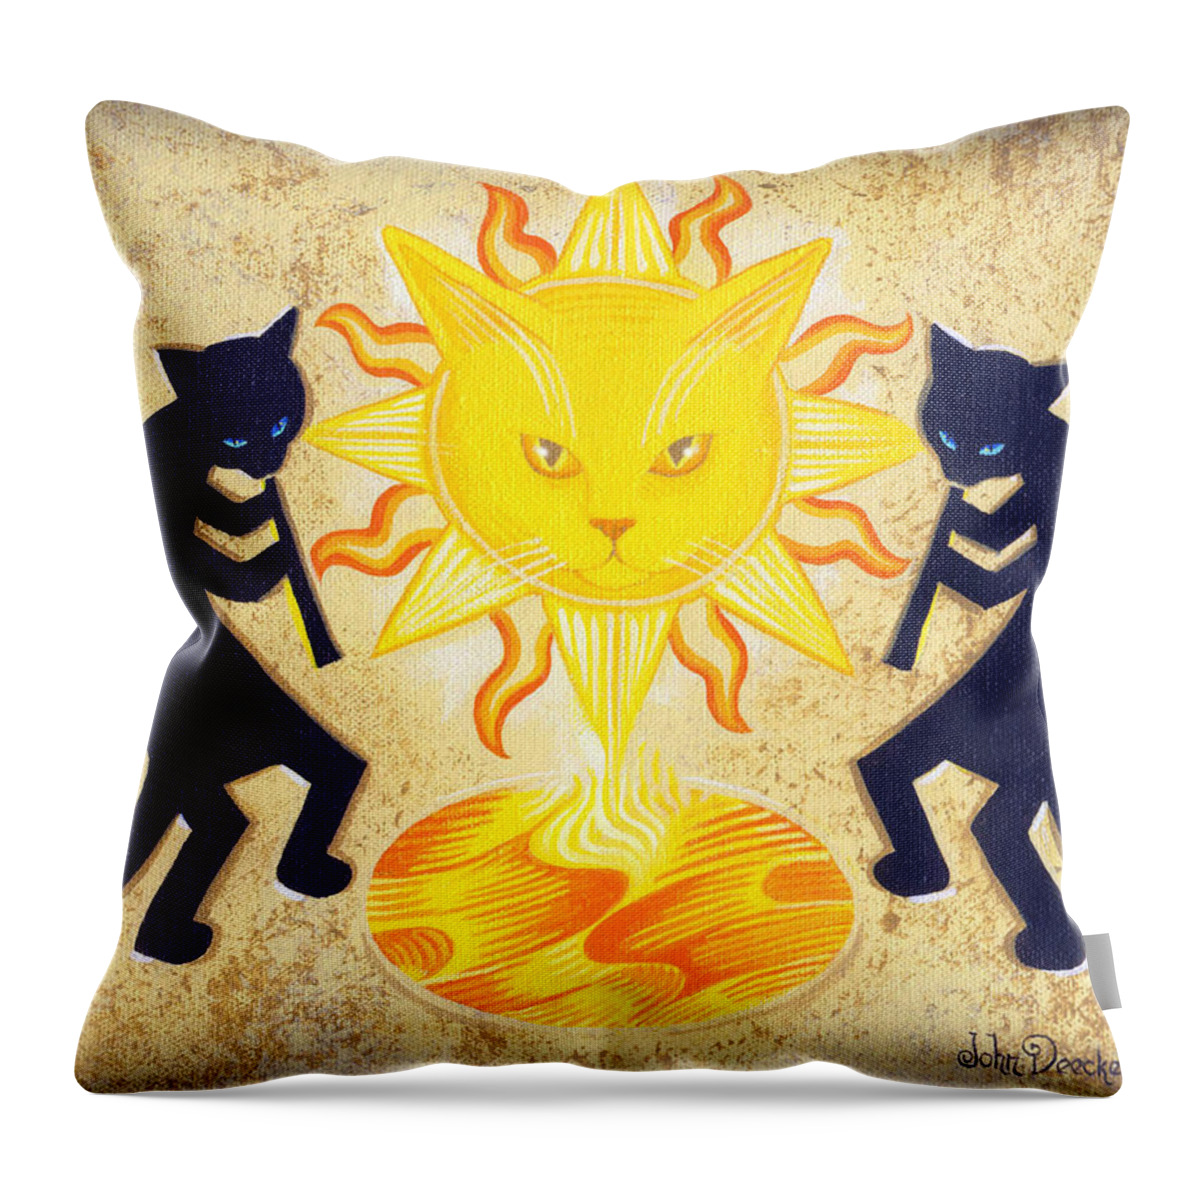 Black Cat Throw Pillow featuring the painting Solar Feline Entity by John Deecken